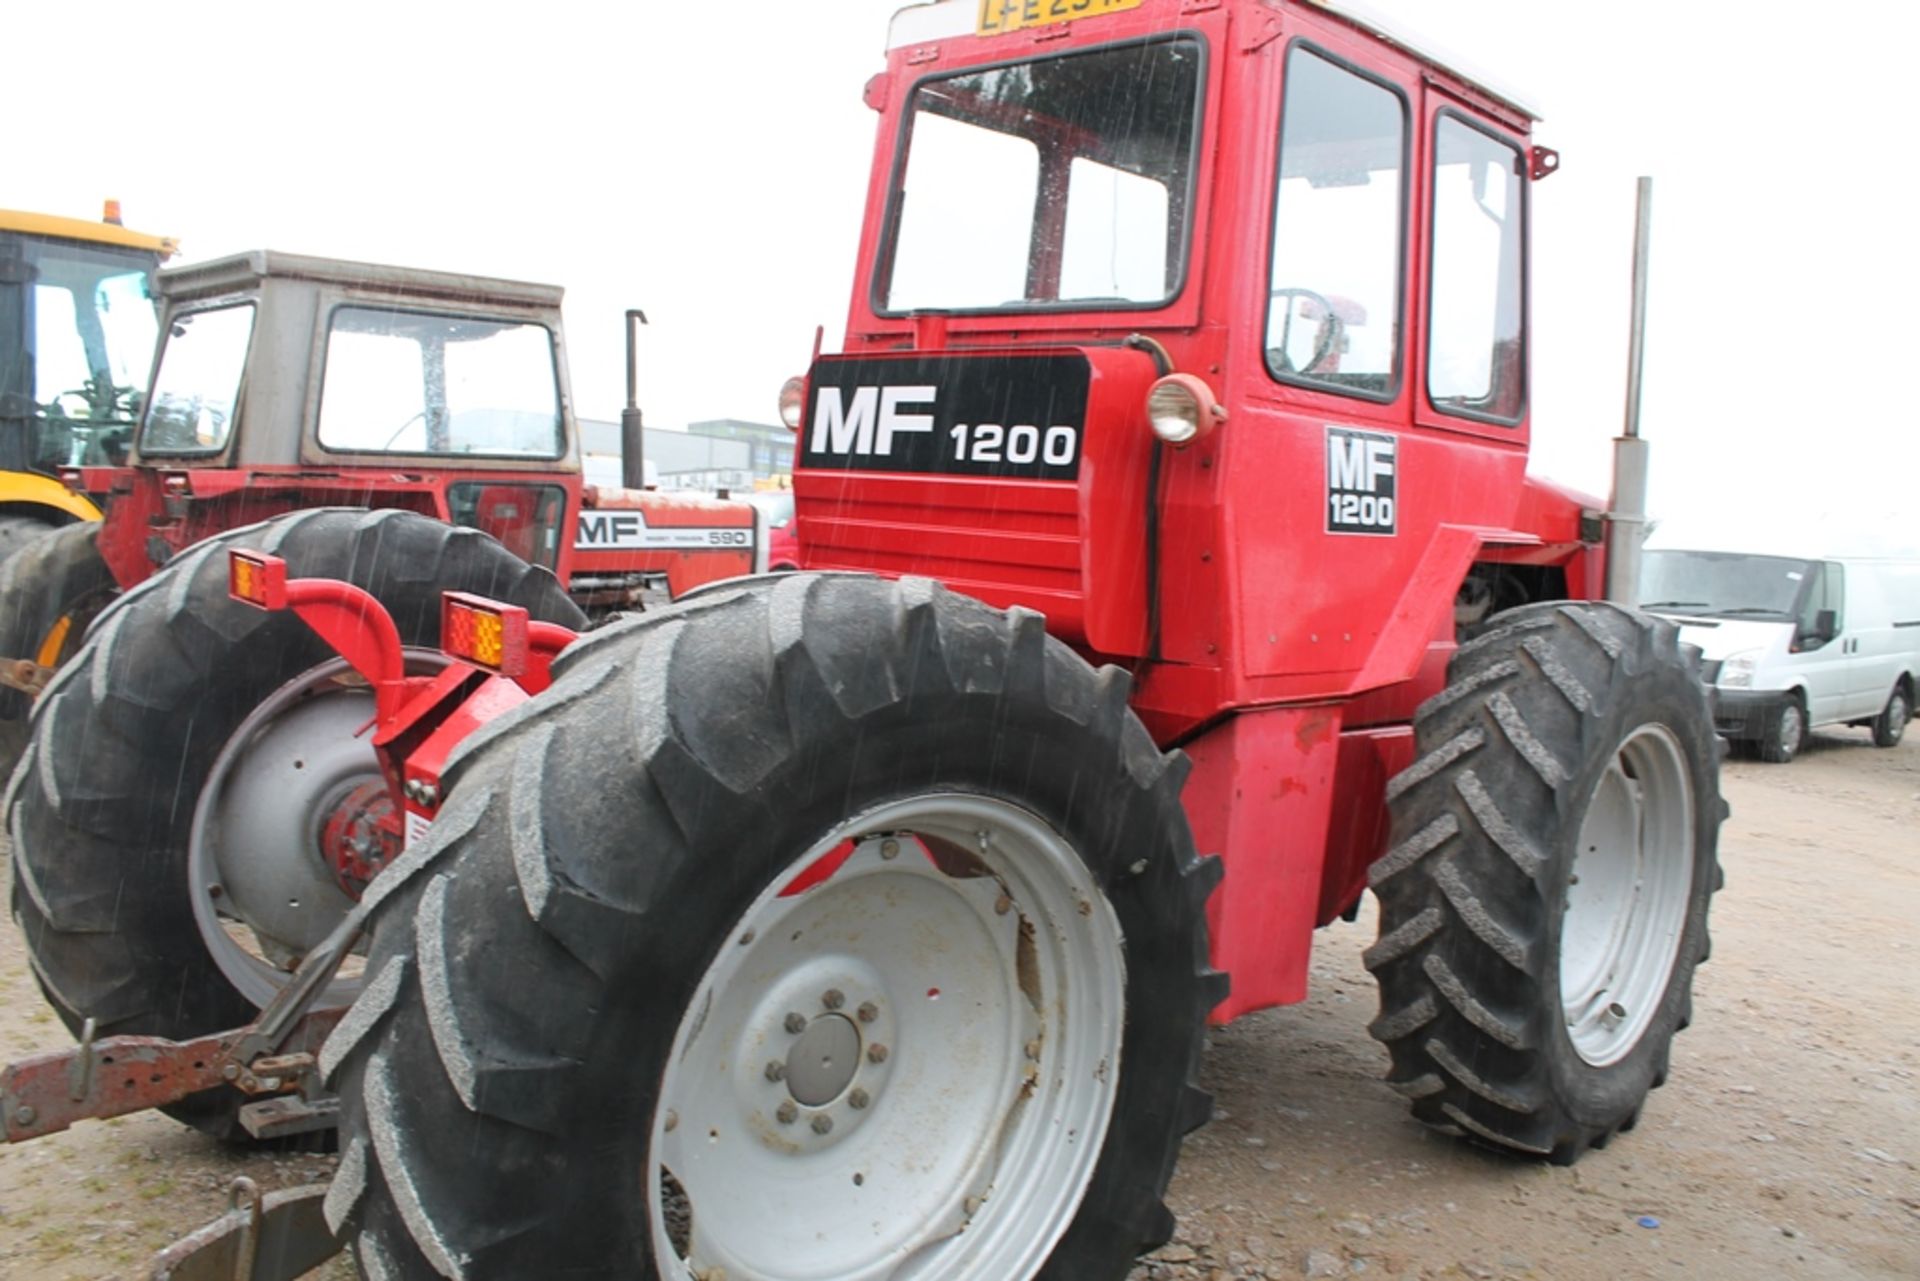 Massey Ferguson 1200 - 0cc Tractor - Image 4 of 6